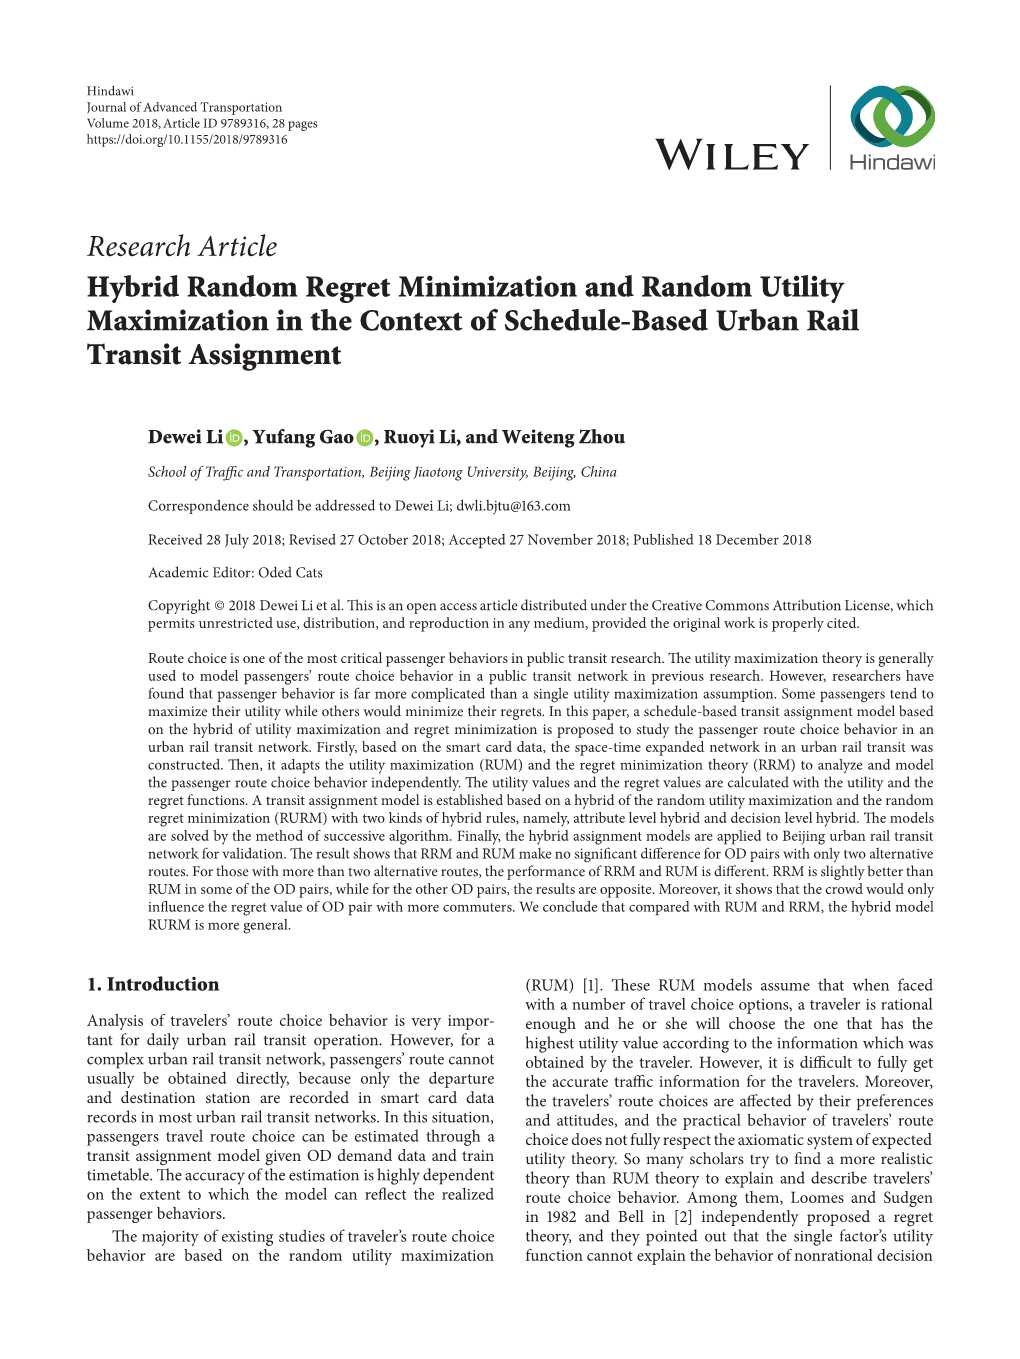 Hybrid Random Regret Minimization and Random Utility Maximization in the Context of Schedule-Based Urban Rail Transit Assignment